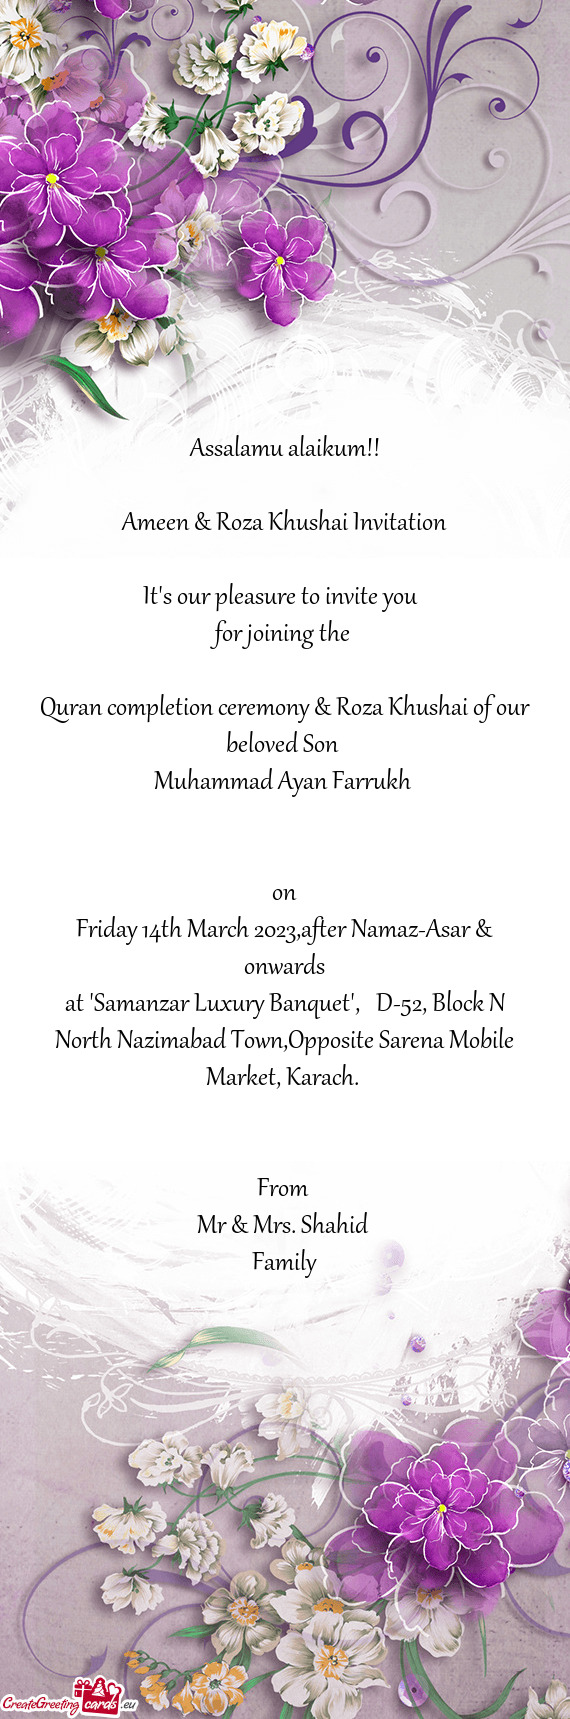 Ameen & Roza Khushai Invitation